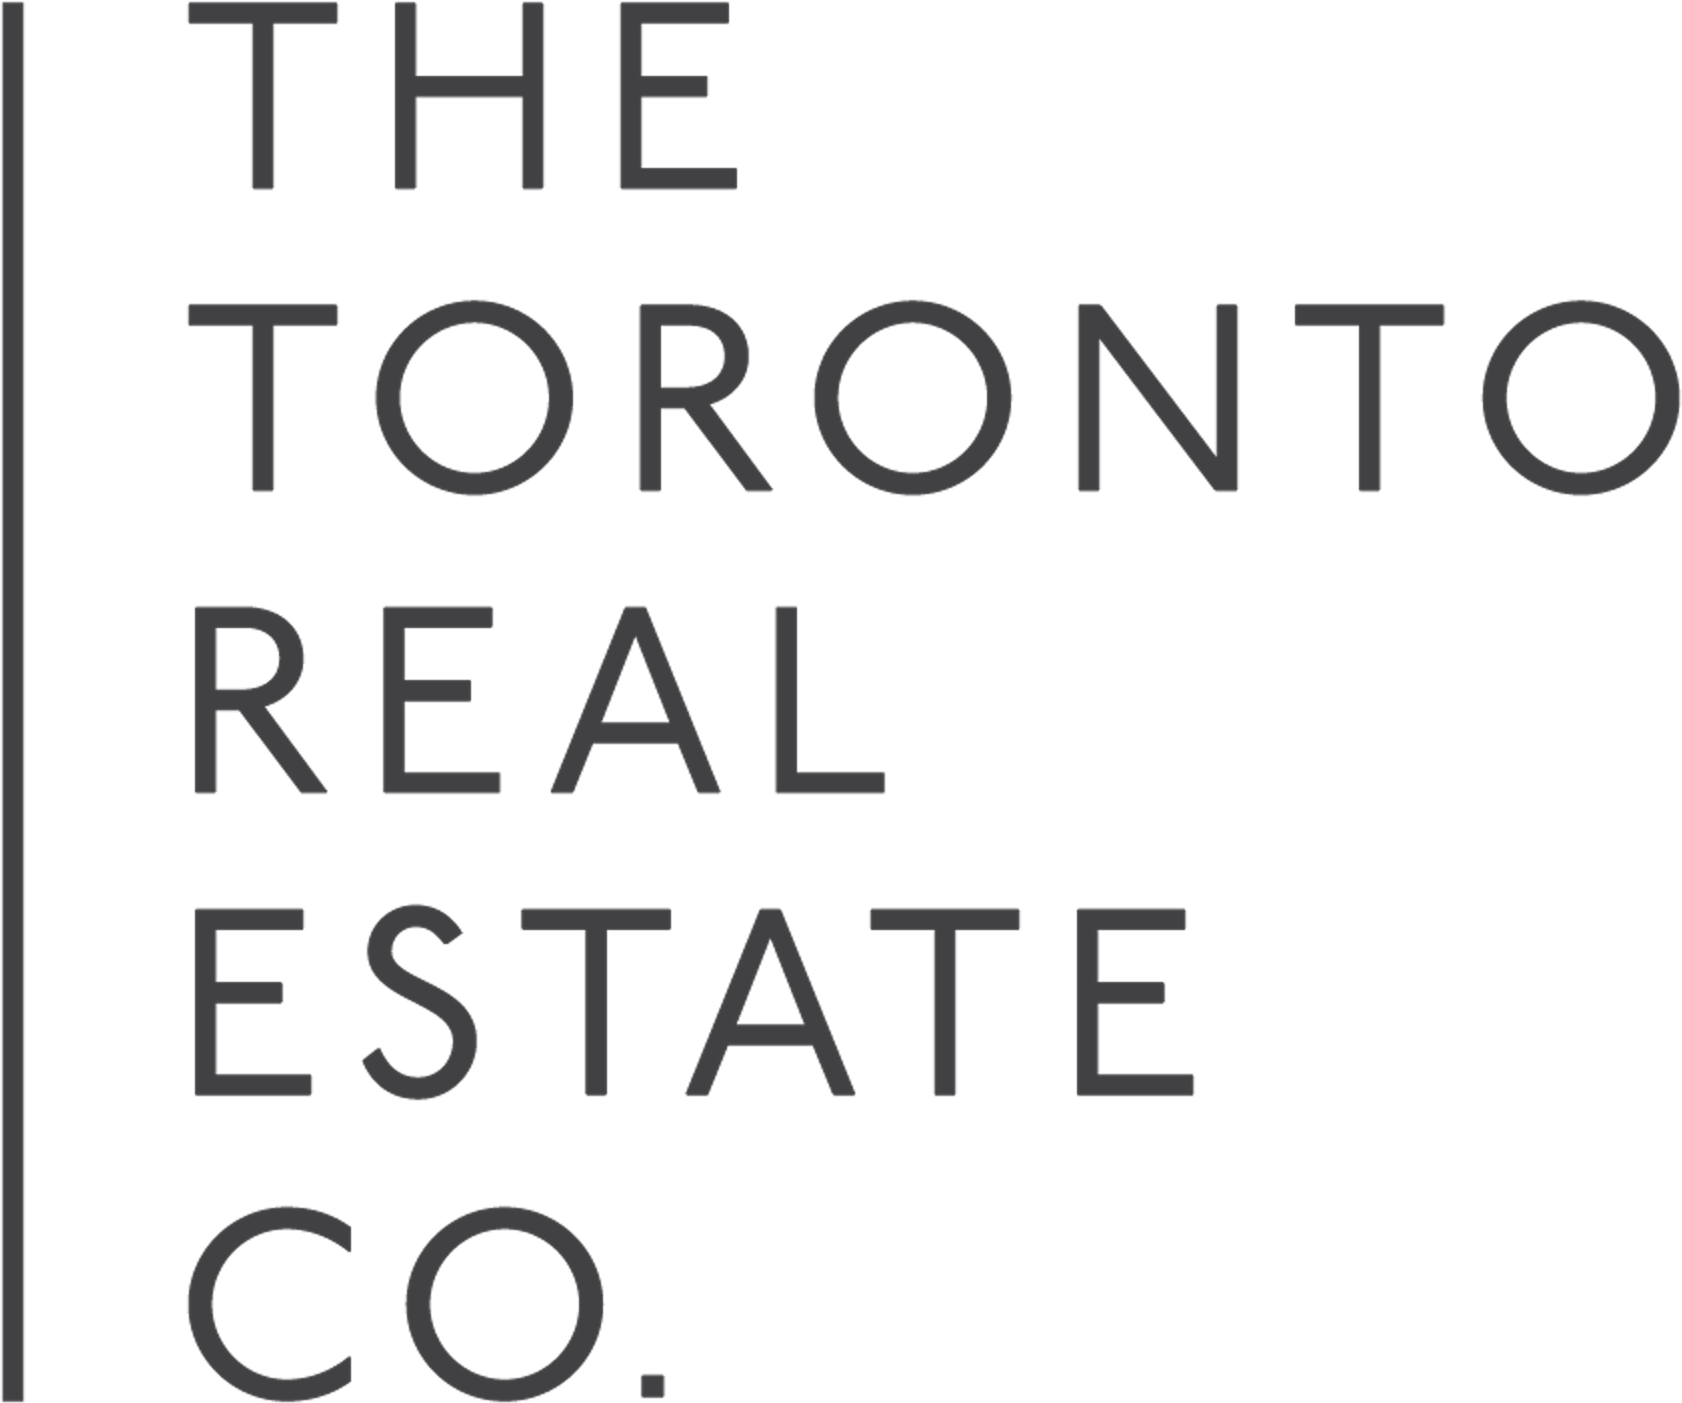 The Toronto Real Estate Co.